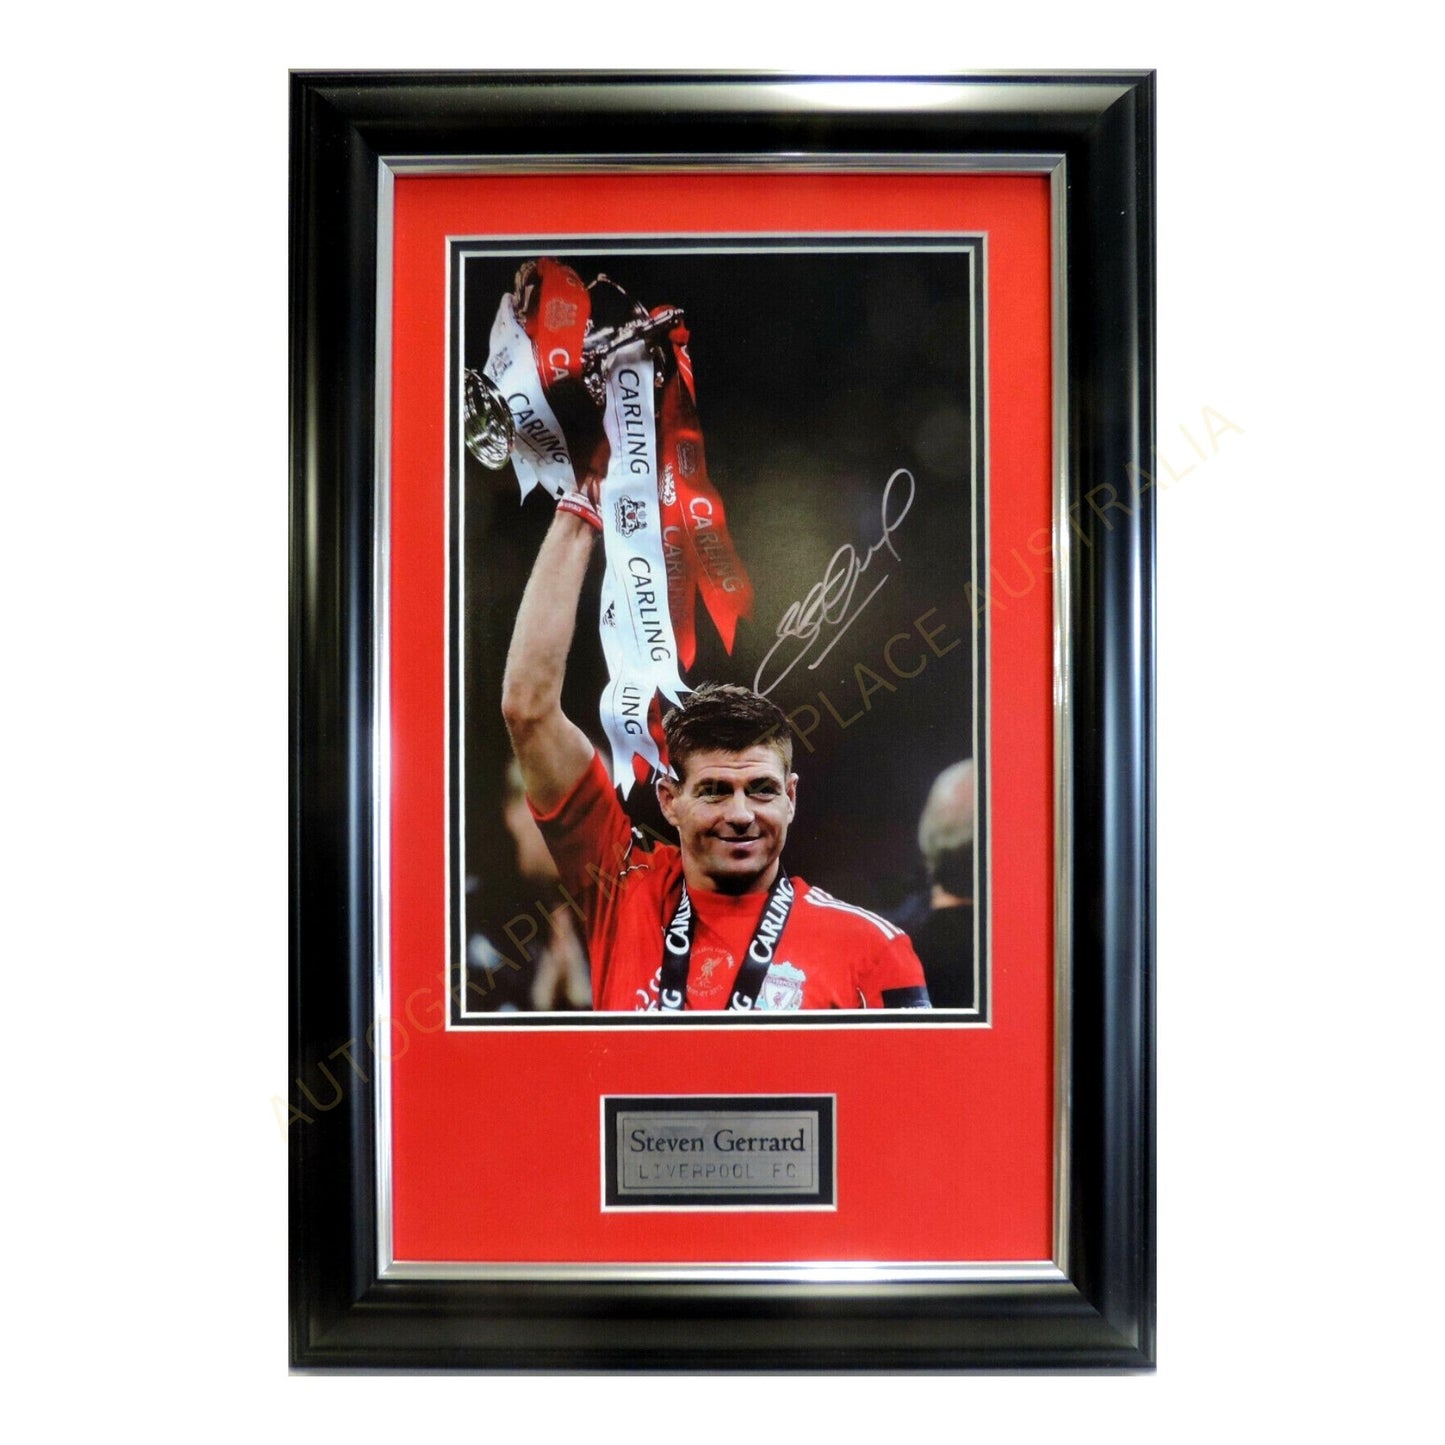 Steven Gerrard Signed Framed Liverpool FC Memorabilia